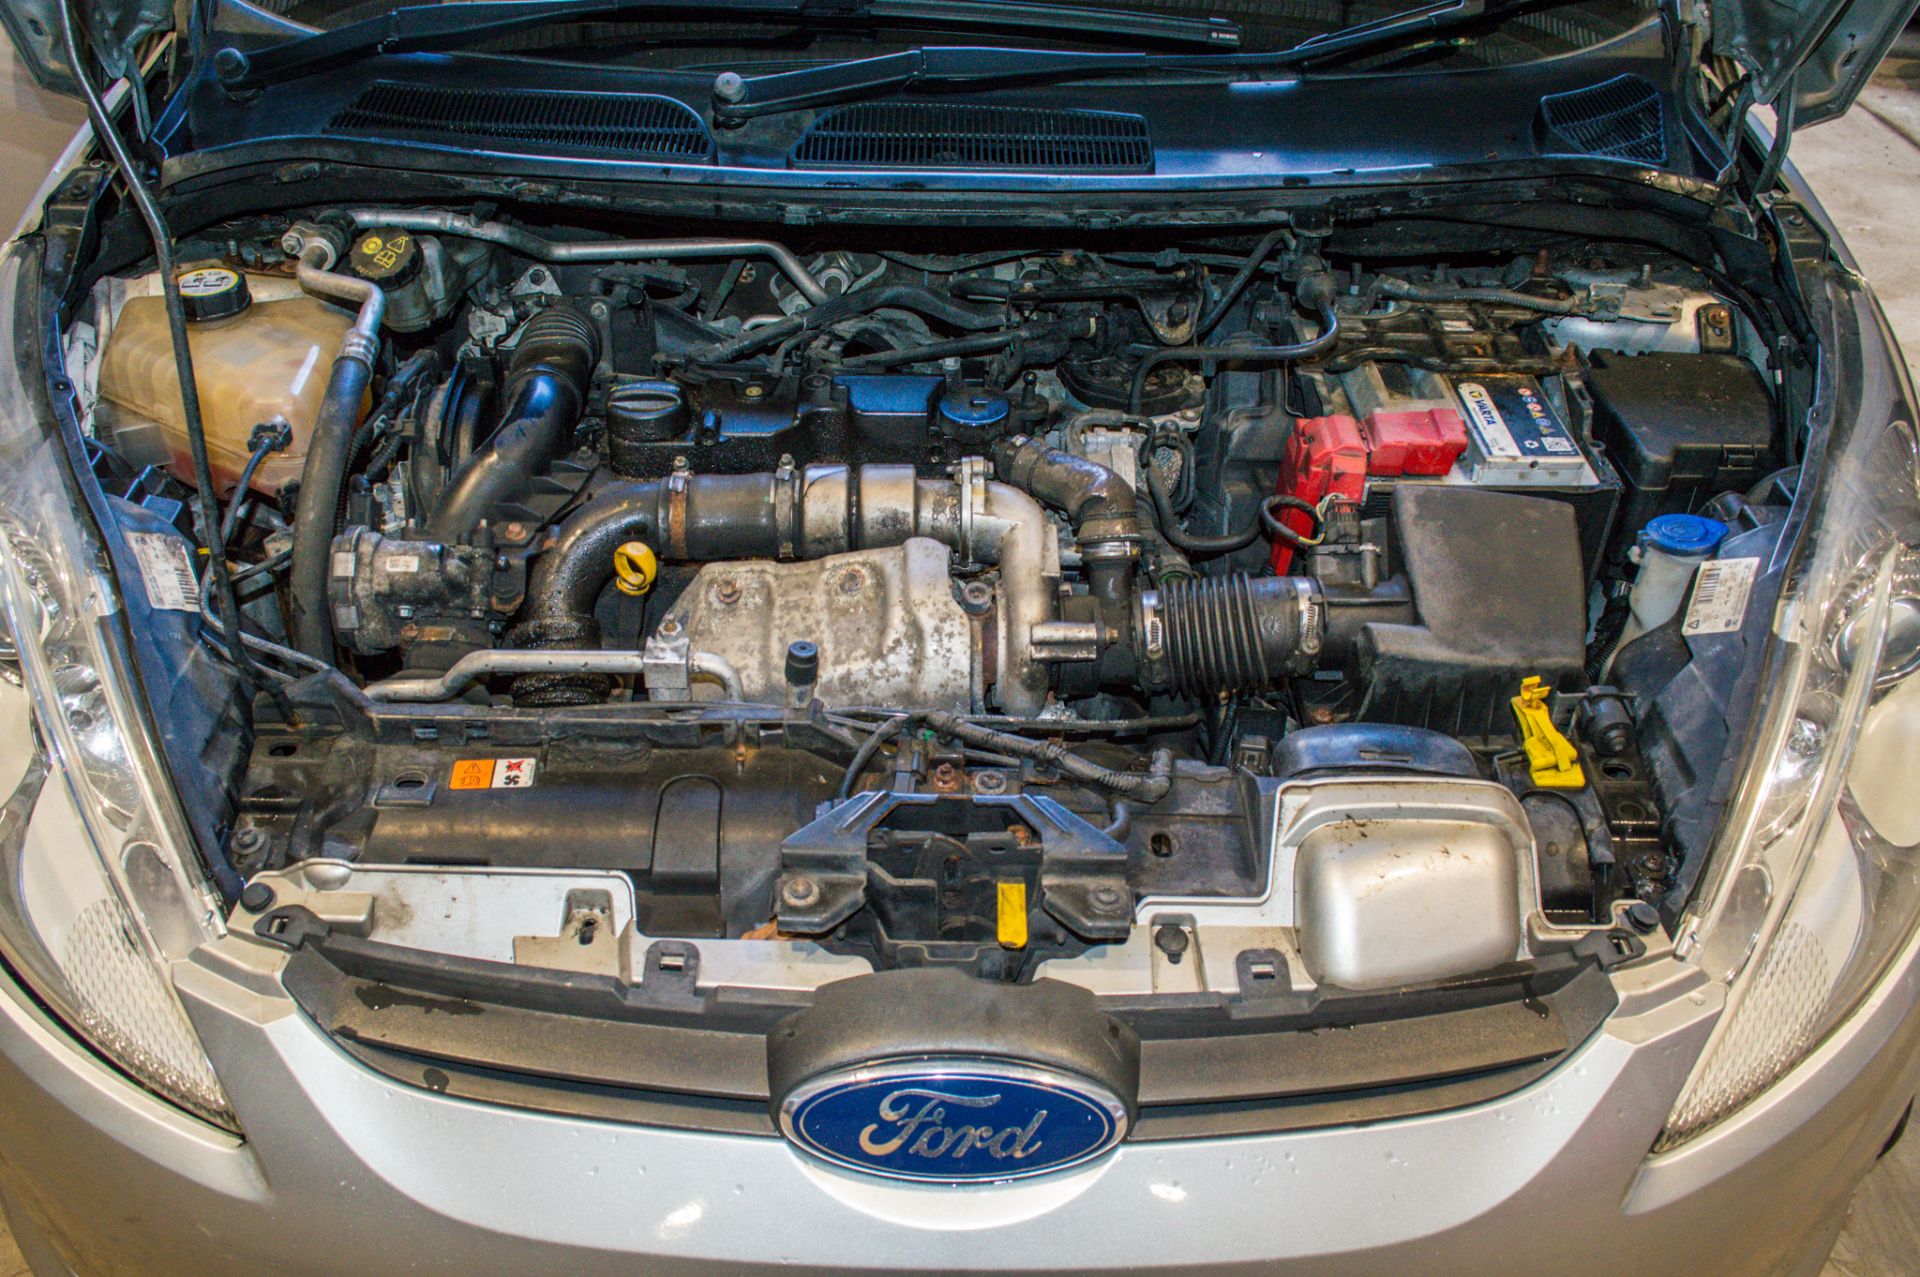 Ford Fiesta 1.6 TDCI 95 Sport car derived van (No VAT) - Image 26 of 28